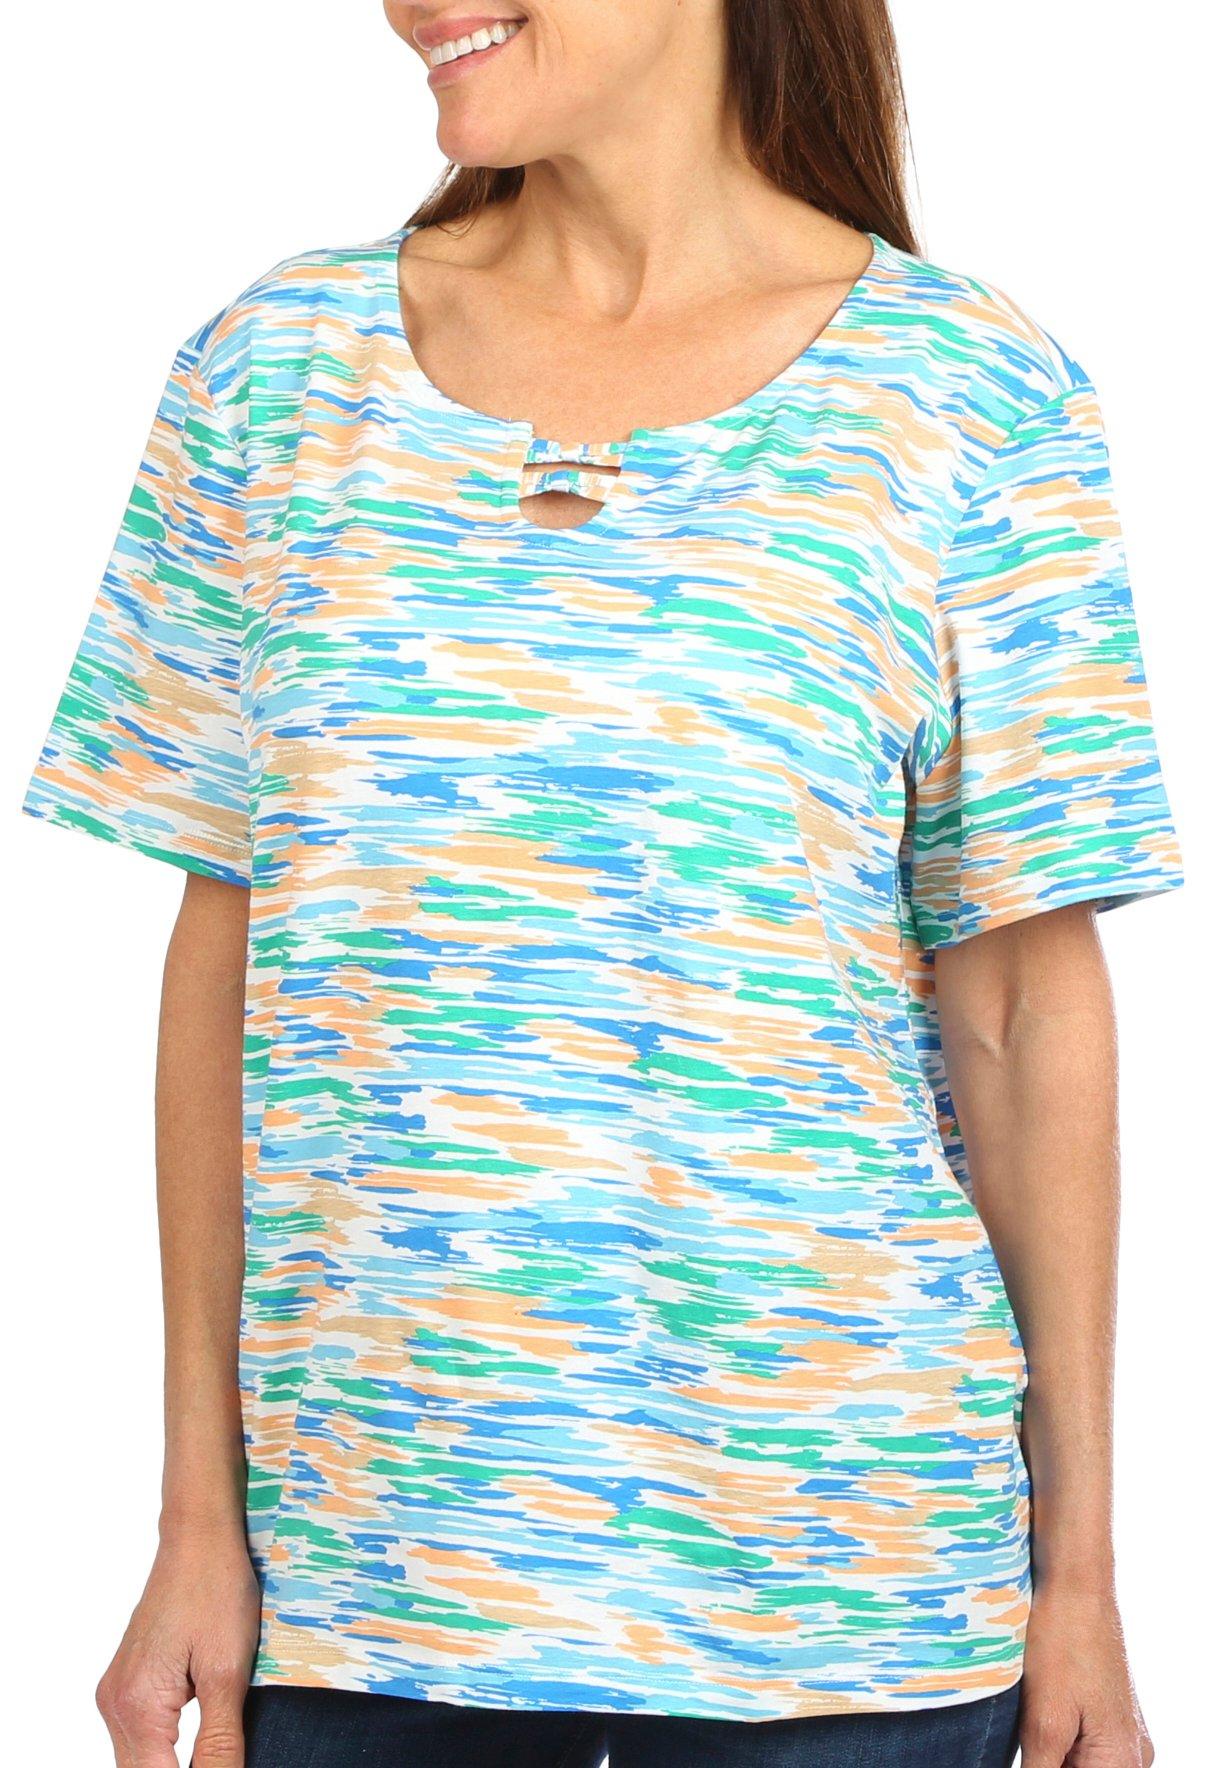 Coral Bay Womens Abstract Short Sleeve Top